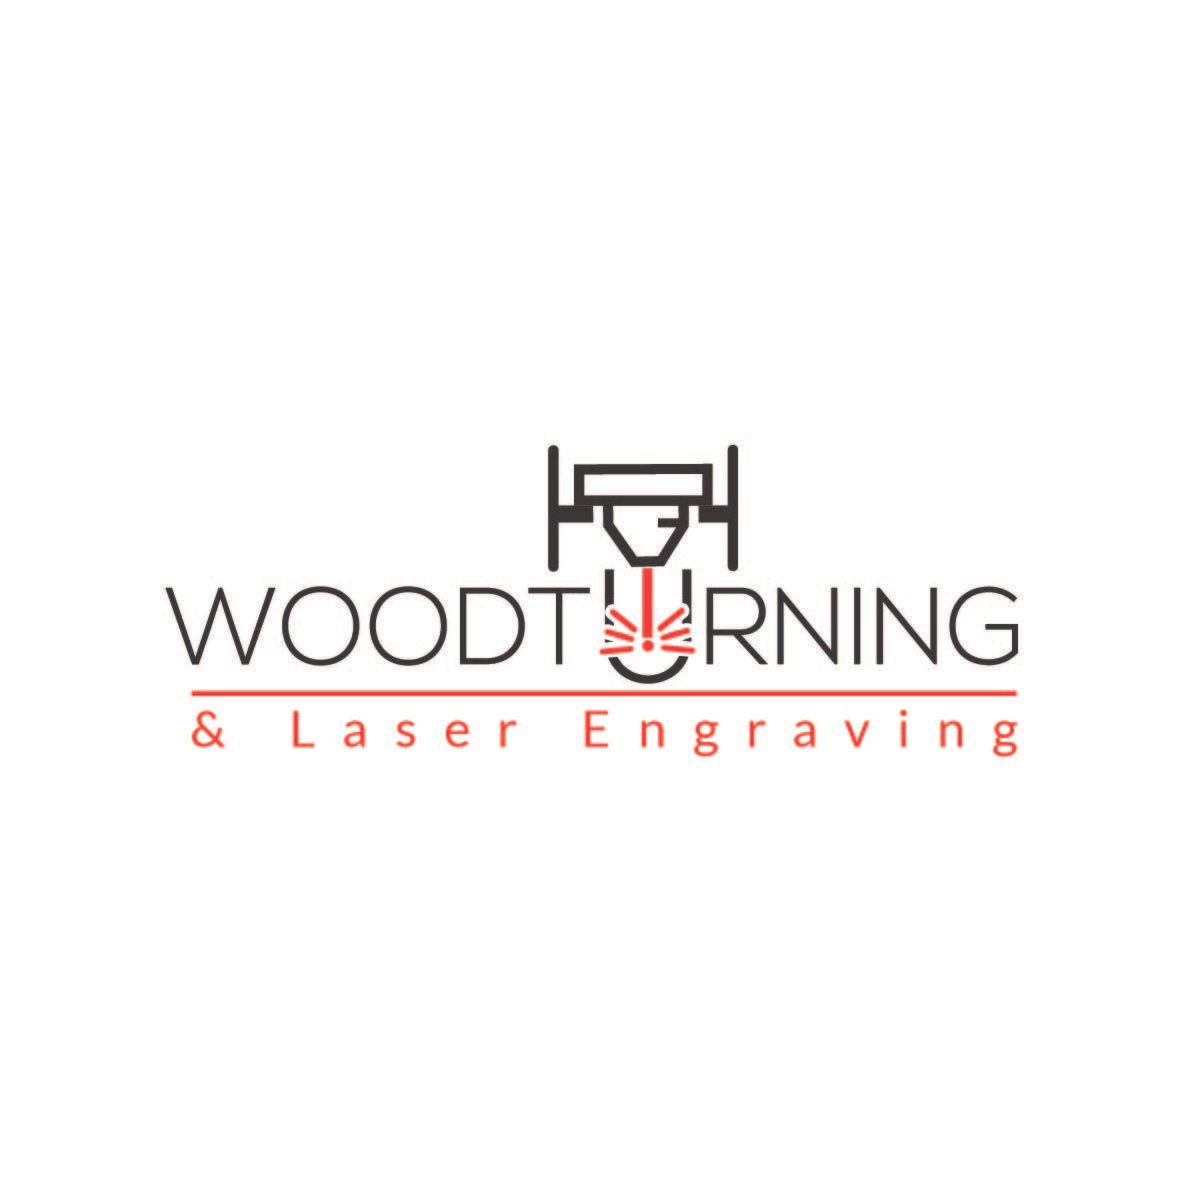 Engraving Logo - Playful, Colorful Logo Design for Woodturning & Laser Engraving